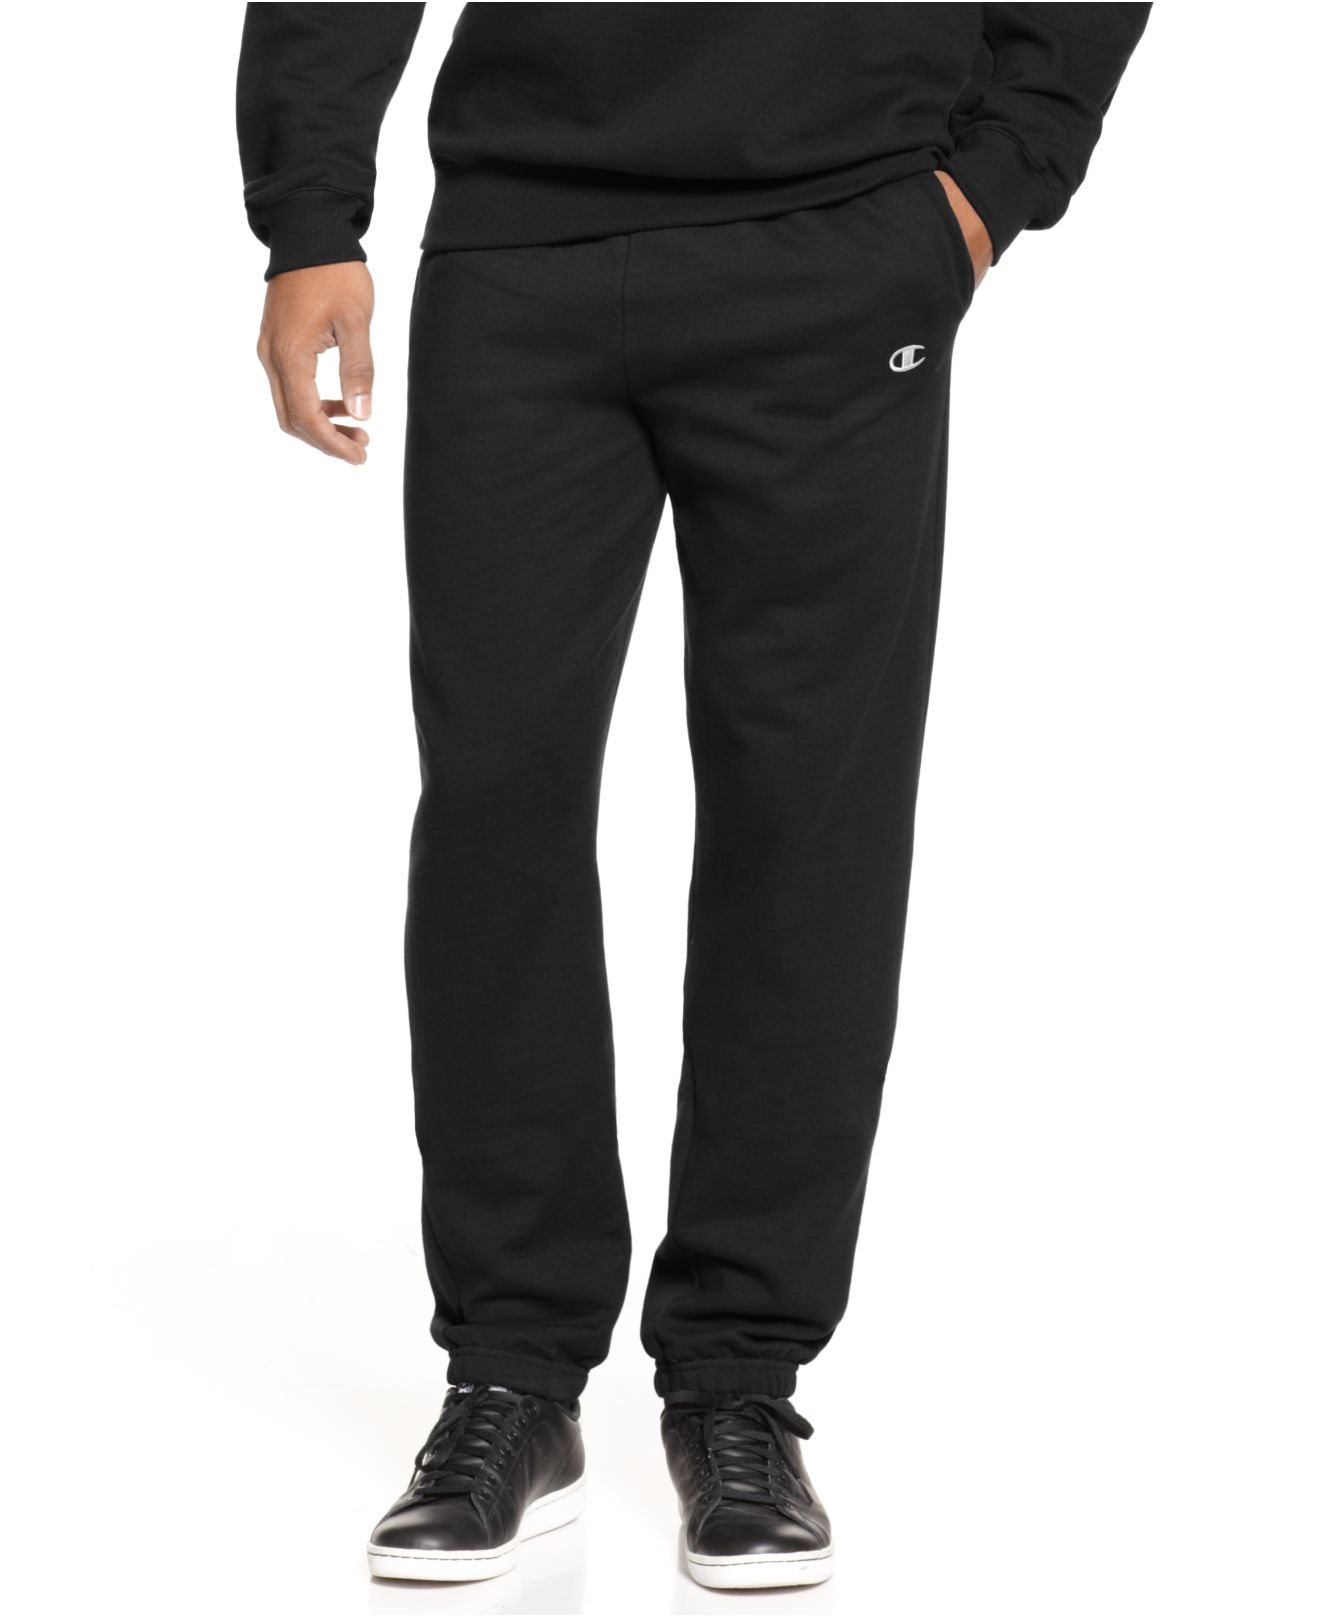 Lyst - Champion Men's Fleece Sweatpants in Black for Men